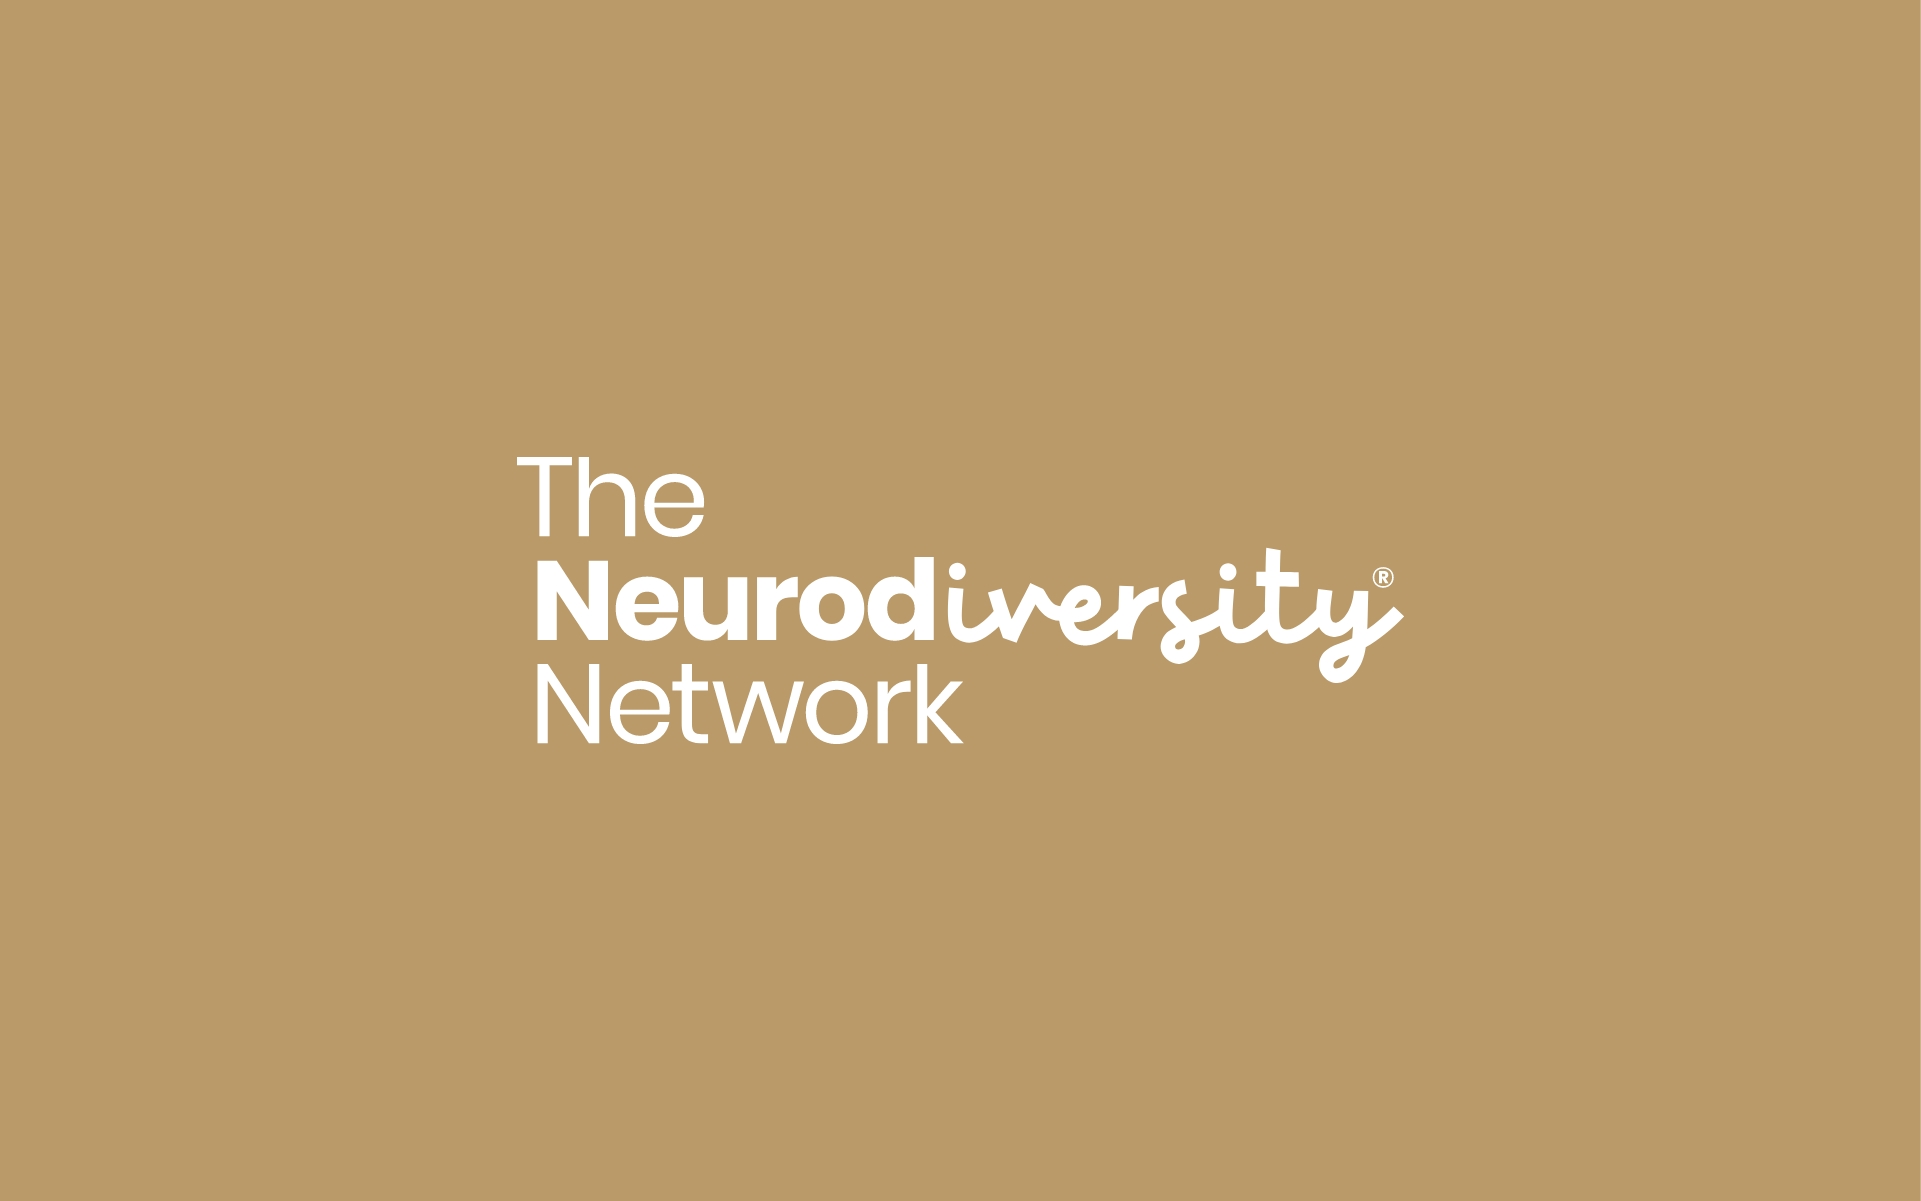 The Neurodiversity Network Brand Design and Development by TL Design Co.